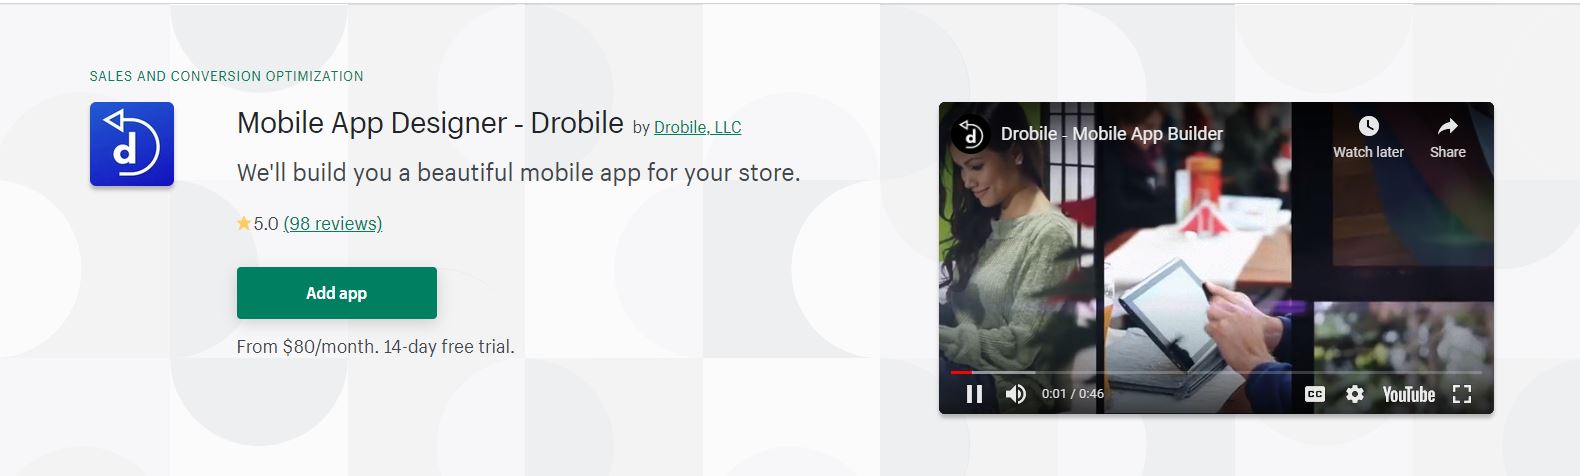 Shopify mobile app builder: